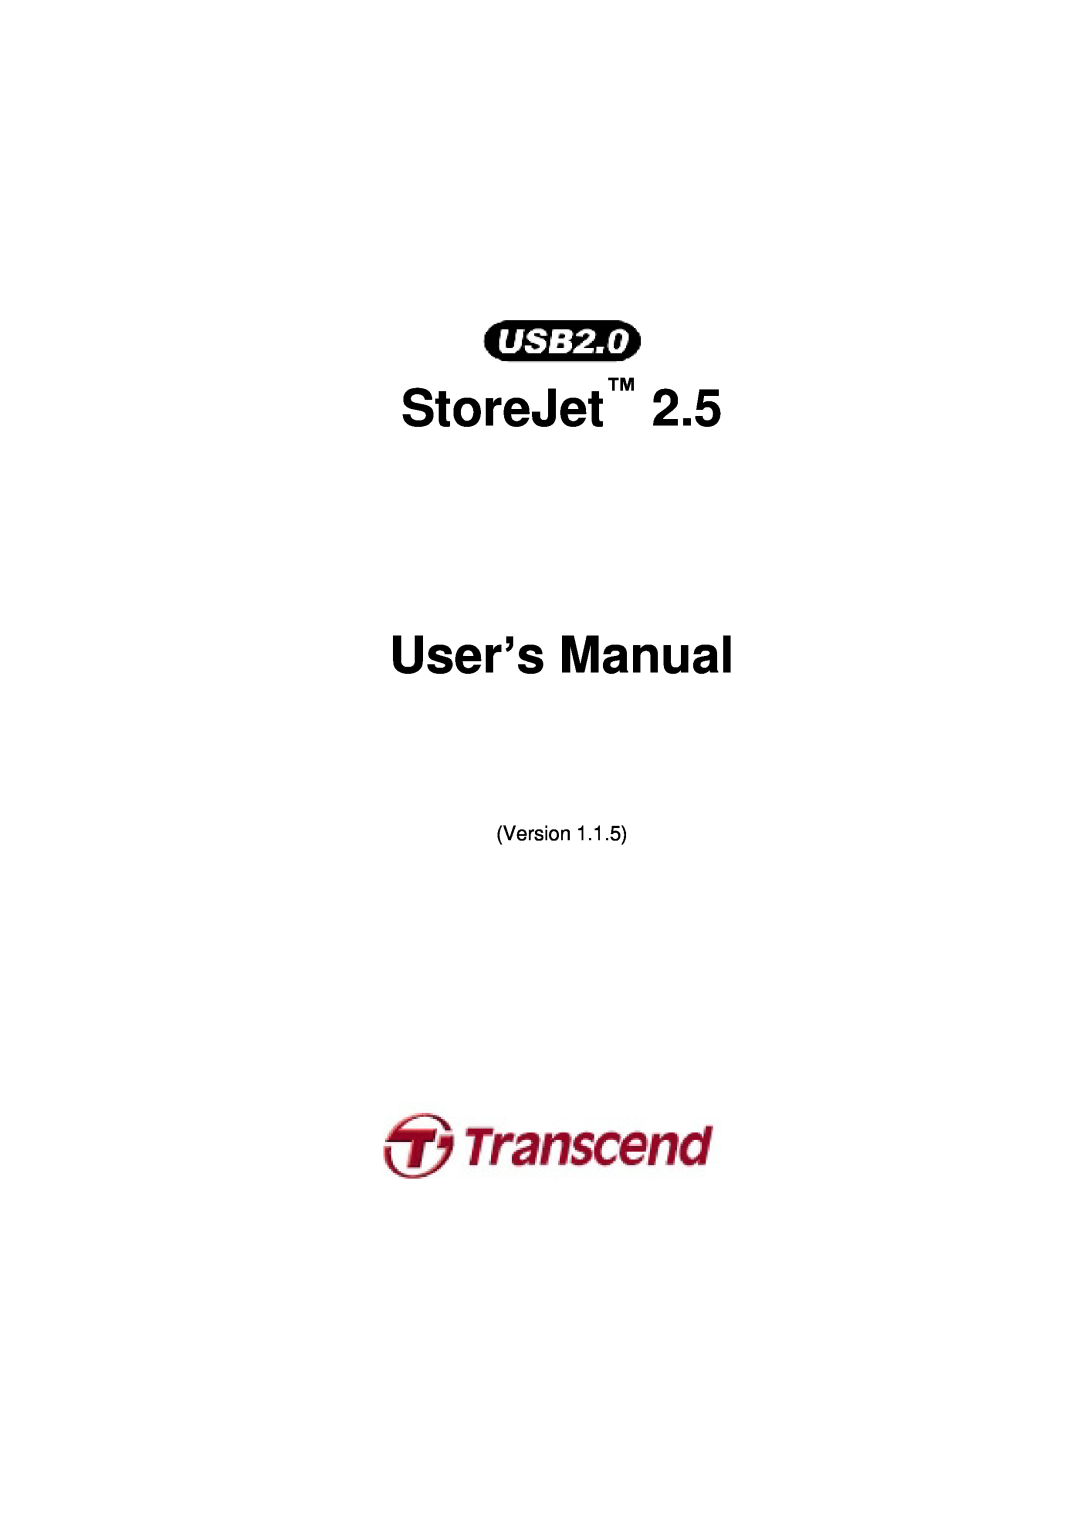 Transcend Information 25 user manual StoreJet User’s Manual, Version 